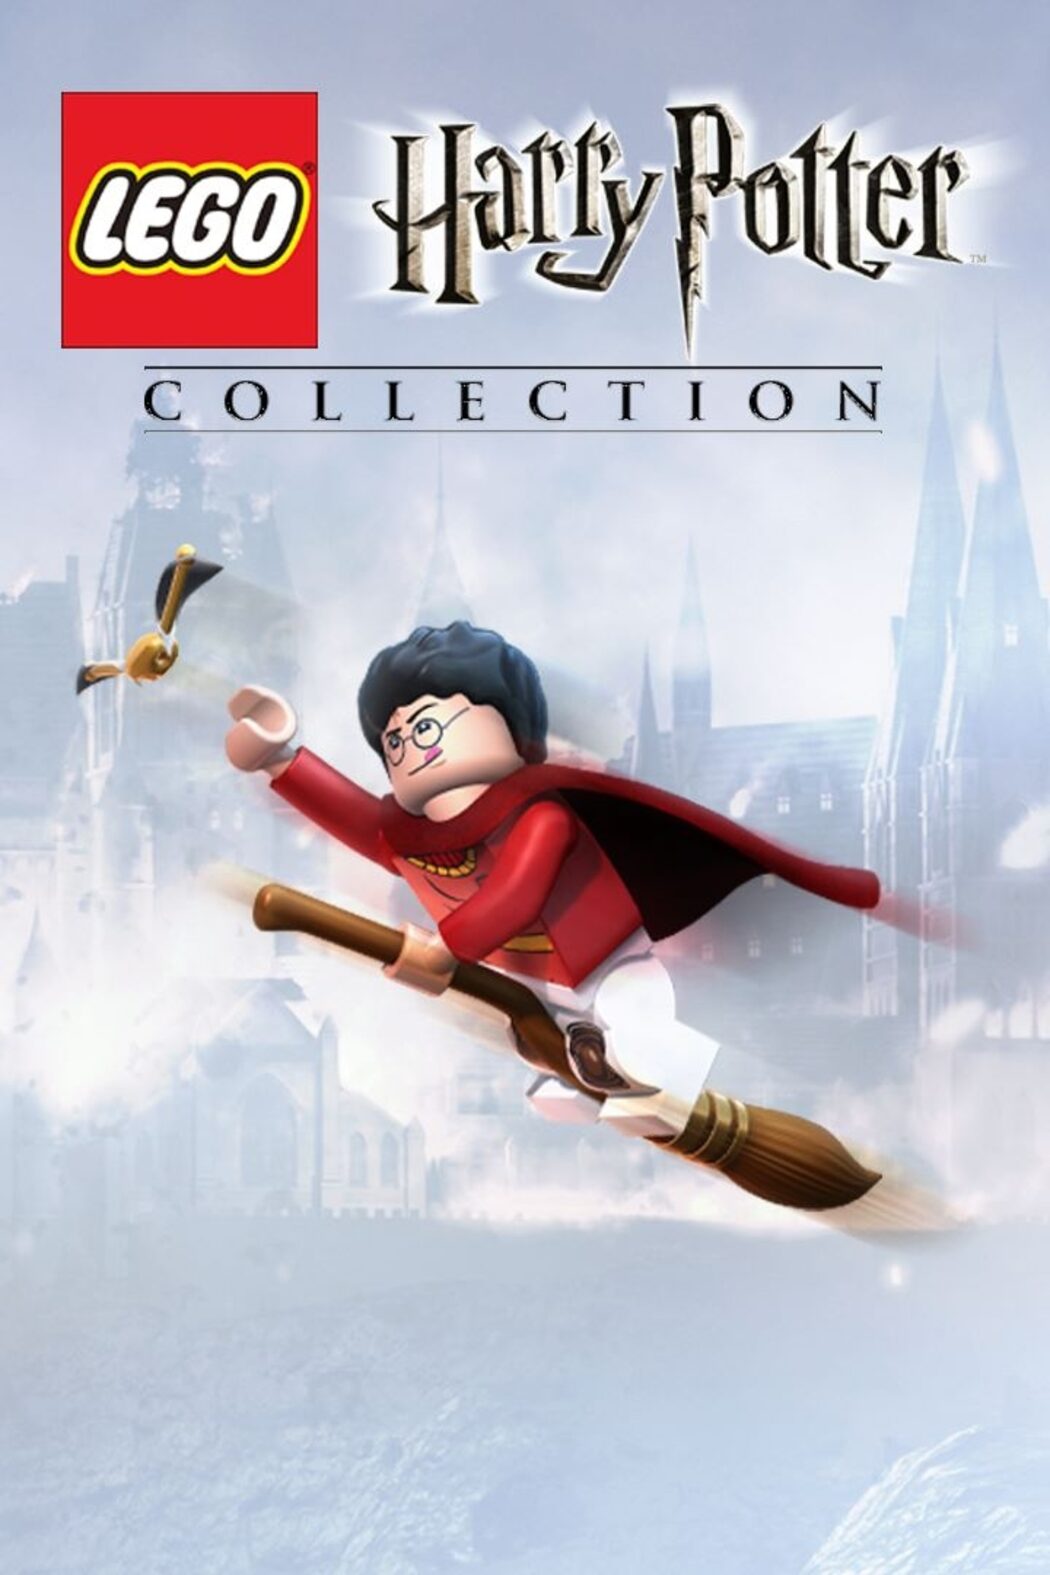 LEGO Harry Potter Collection (XBOX ONE) preço mais barato: 6,97€